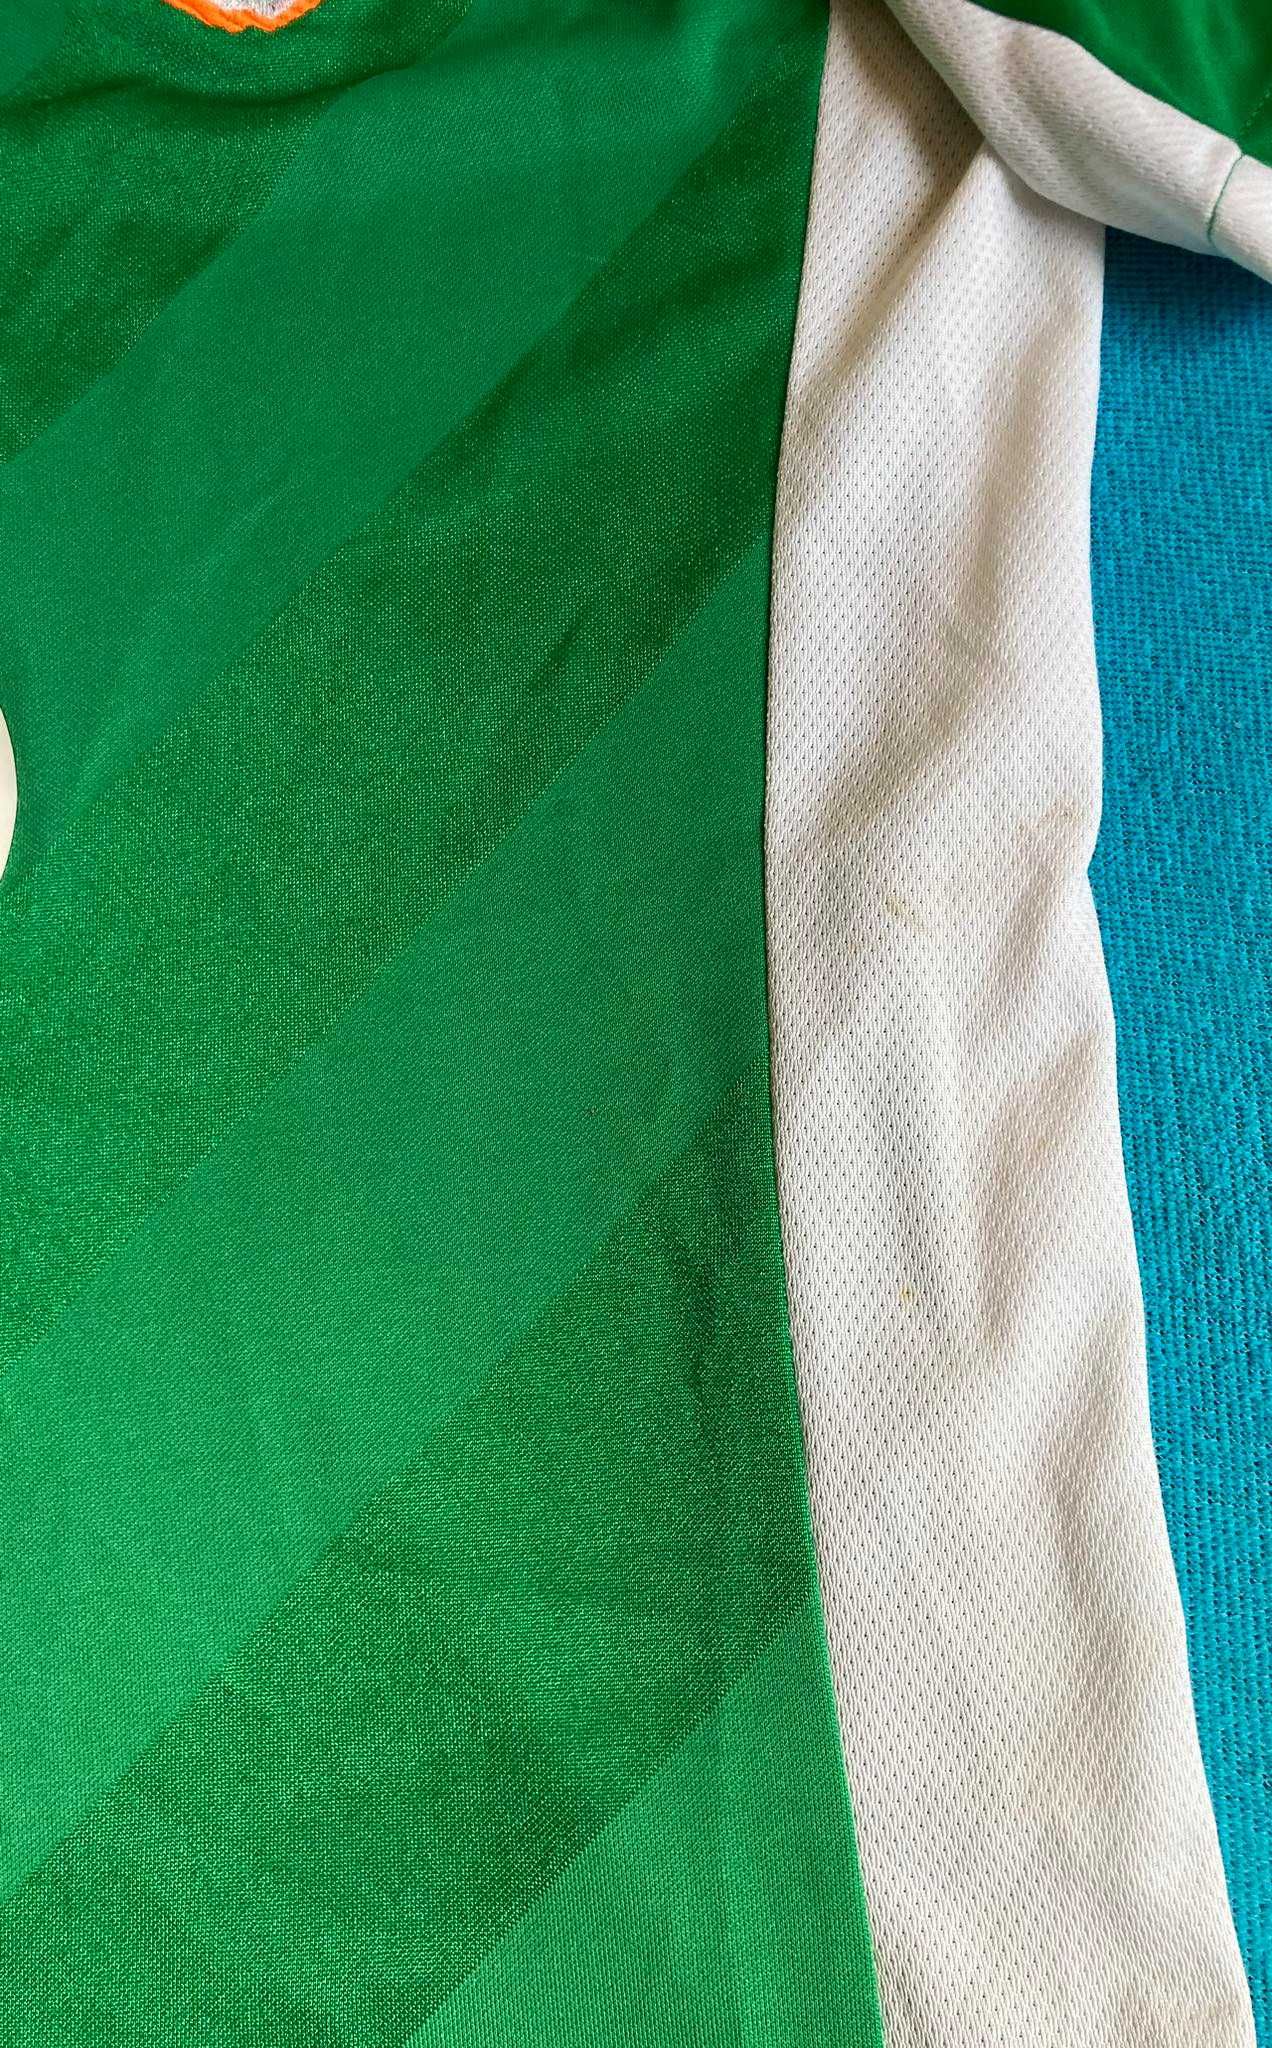 Koszulka Piłkarska Irlandia 2016 Umbro Roz. S